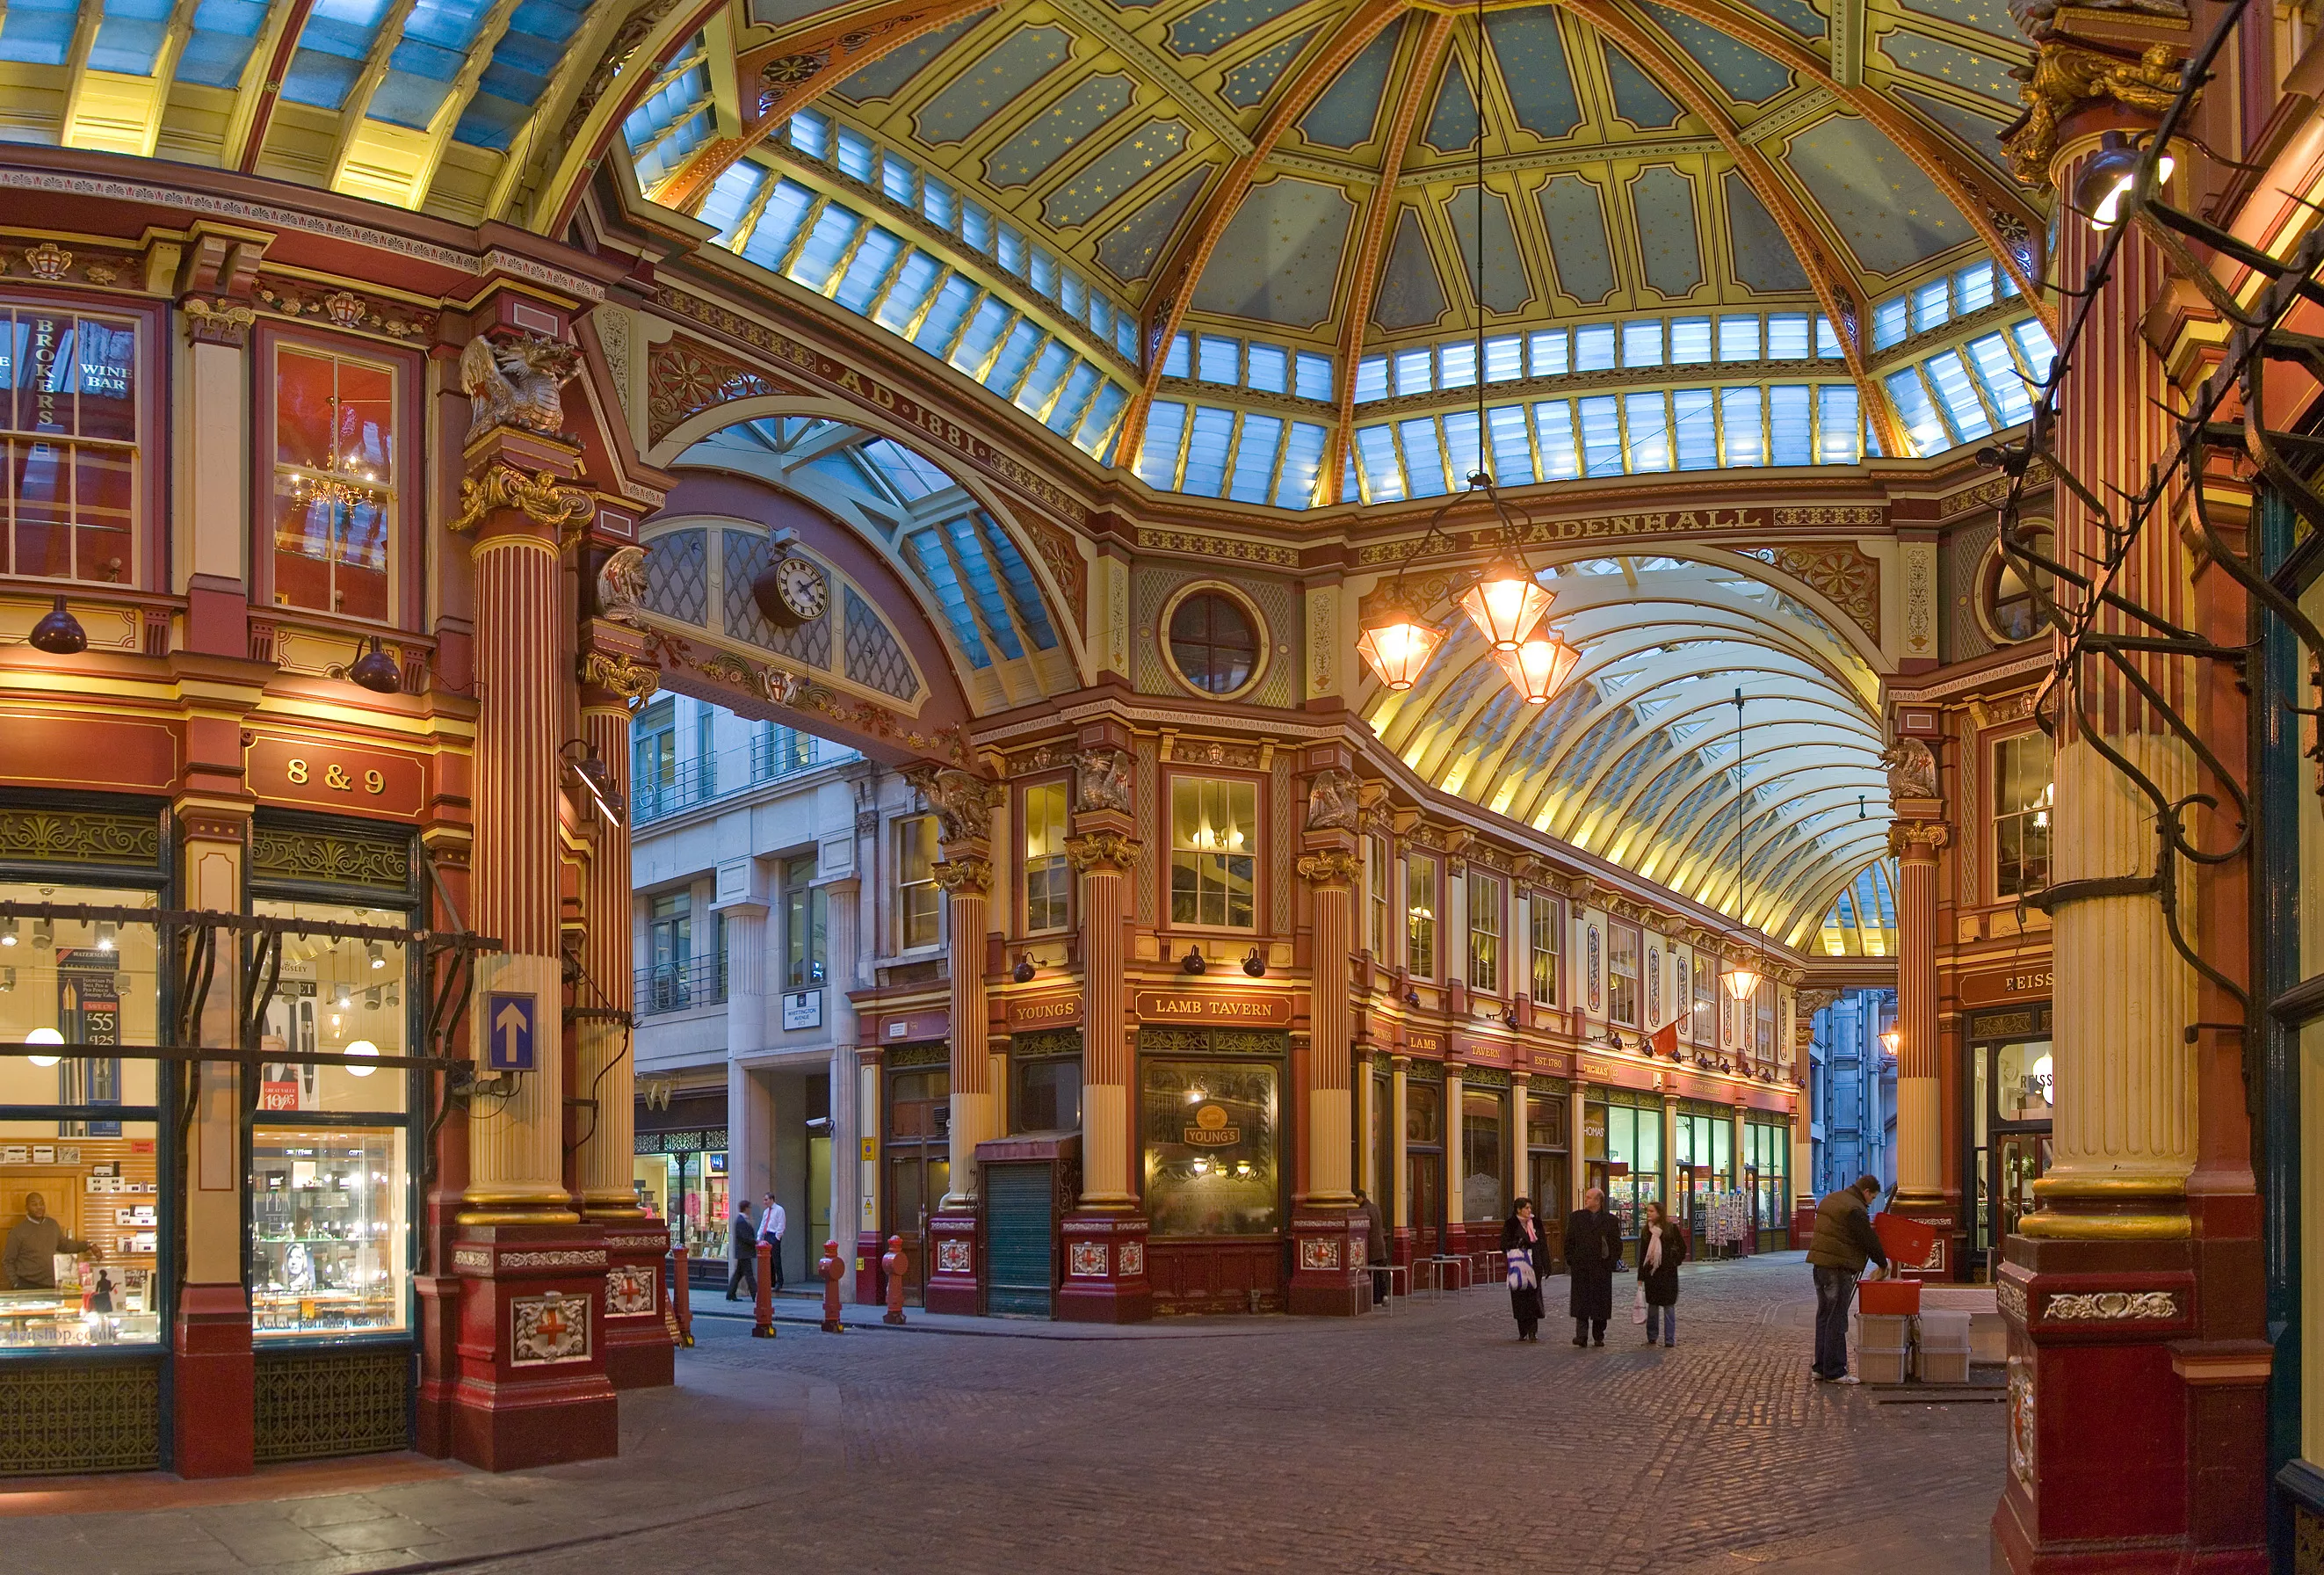 Ledengol Market in United Kingdom, Europe | Architecture - Rated 3.7